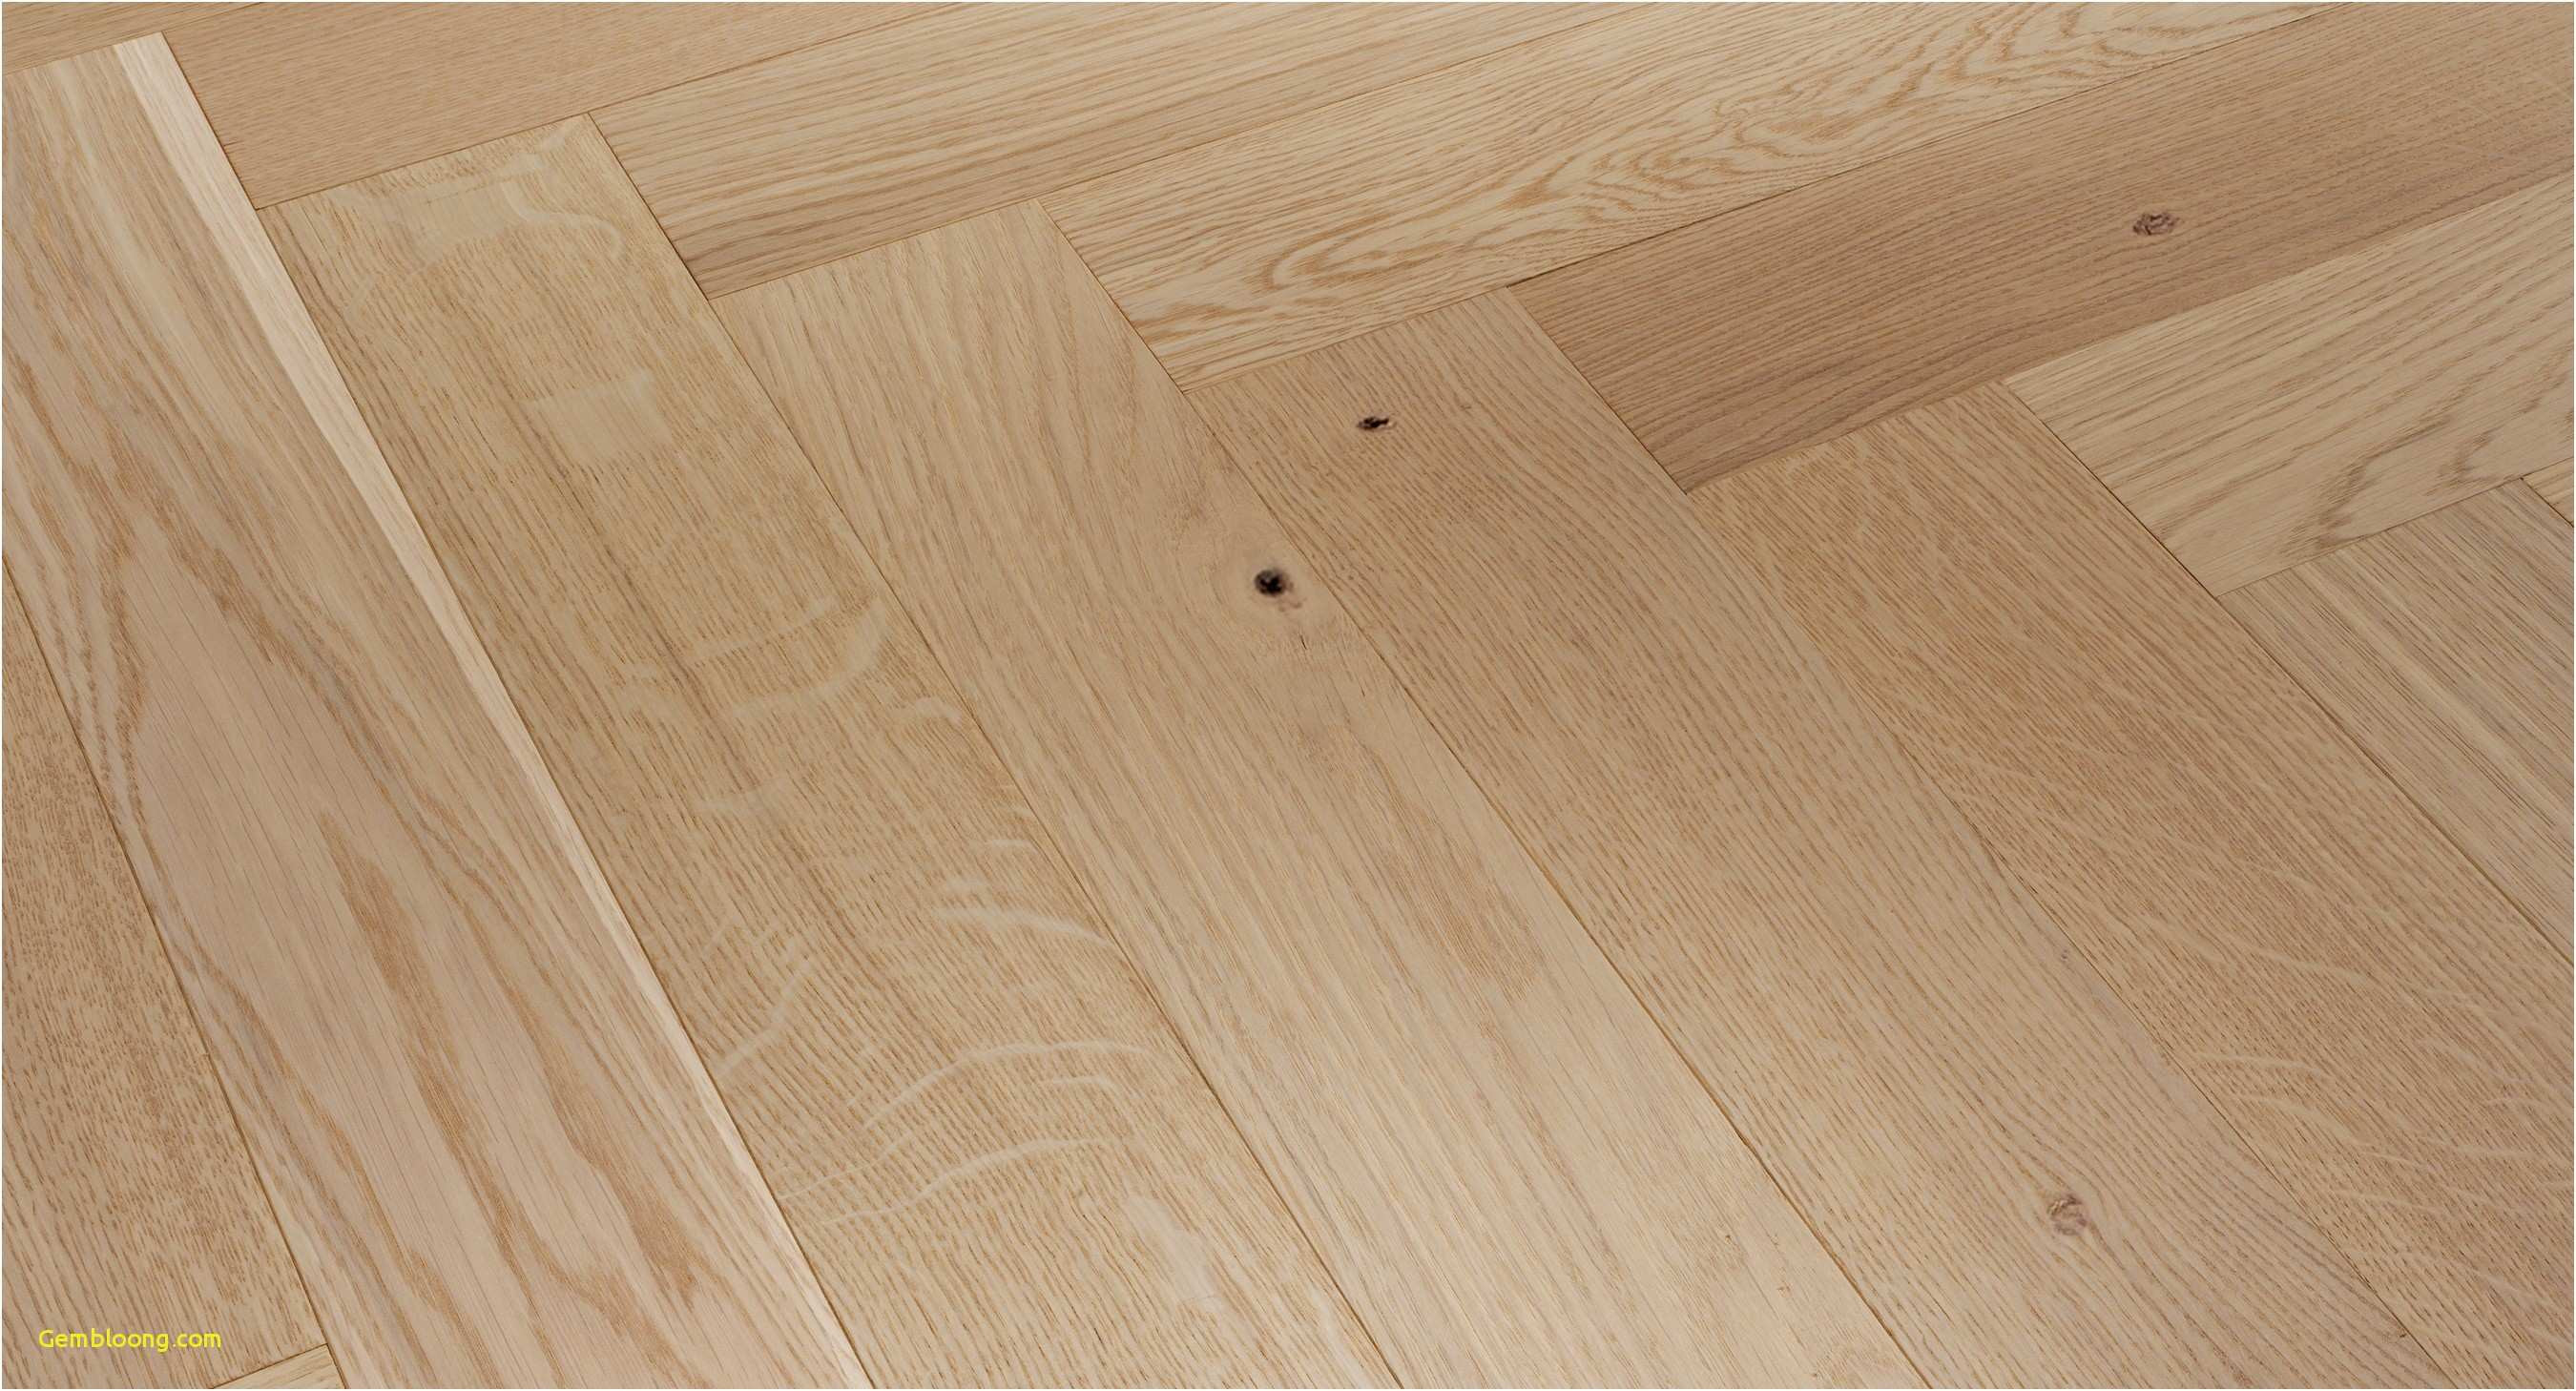 vinyl flooring vs laminate vs hardwood of wood for floors facesinnature throughout wood for floors wood laminate flooring vs hardwood unique splendid exterior